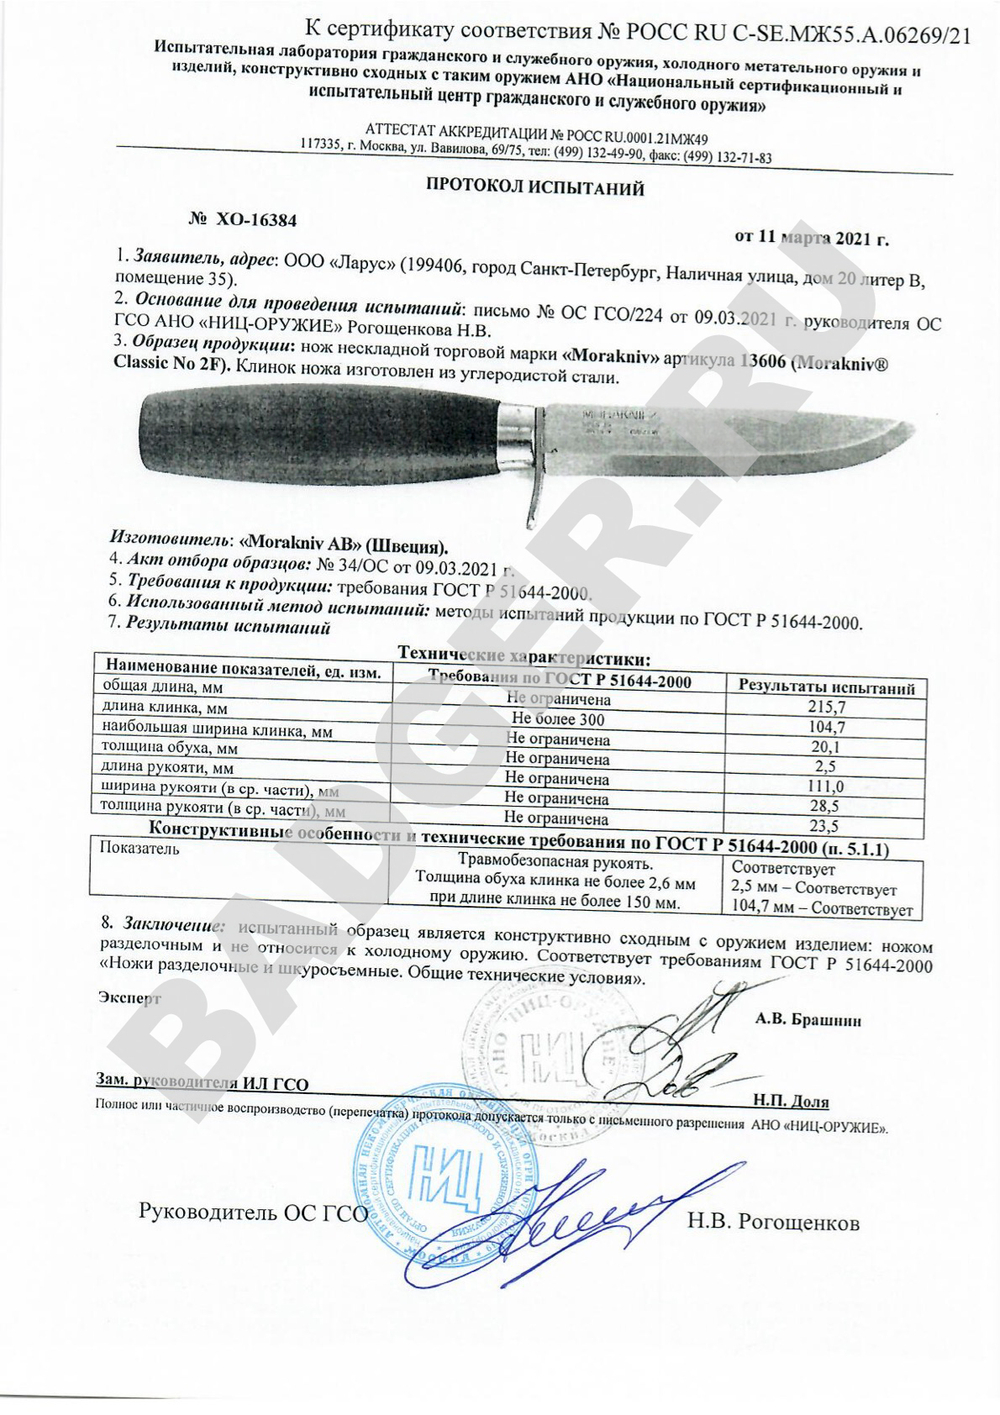 Нож Morakniv Classic №2F, арт. 13606